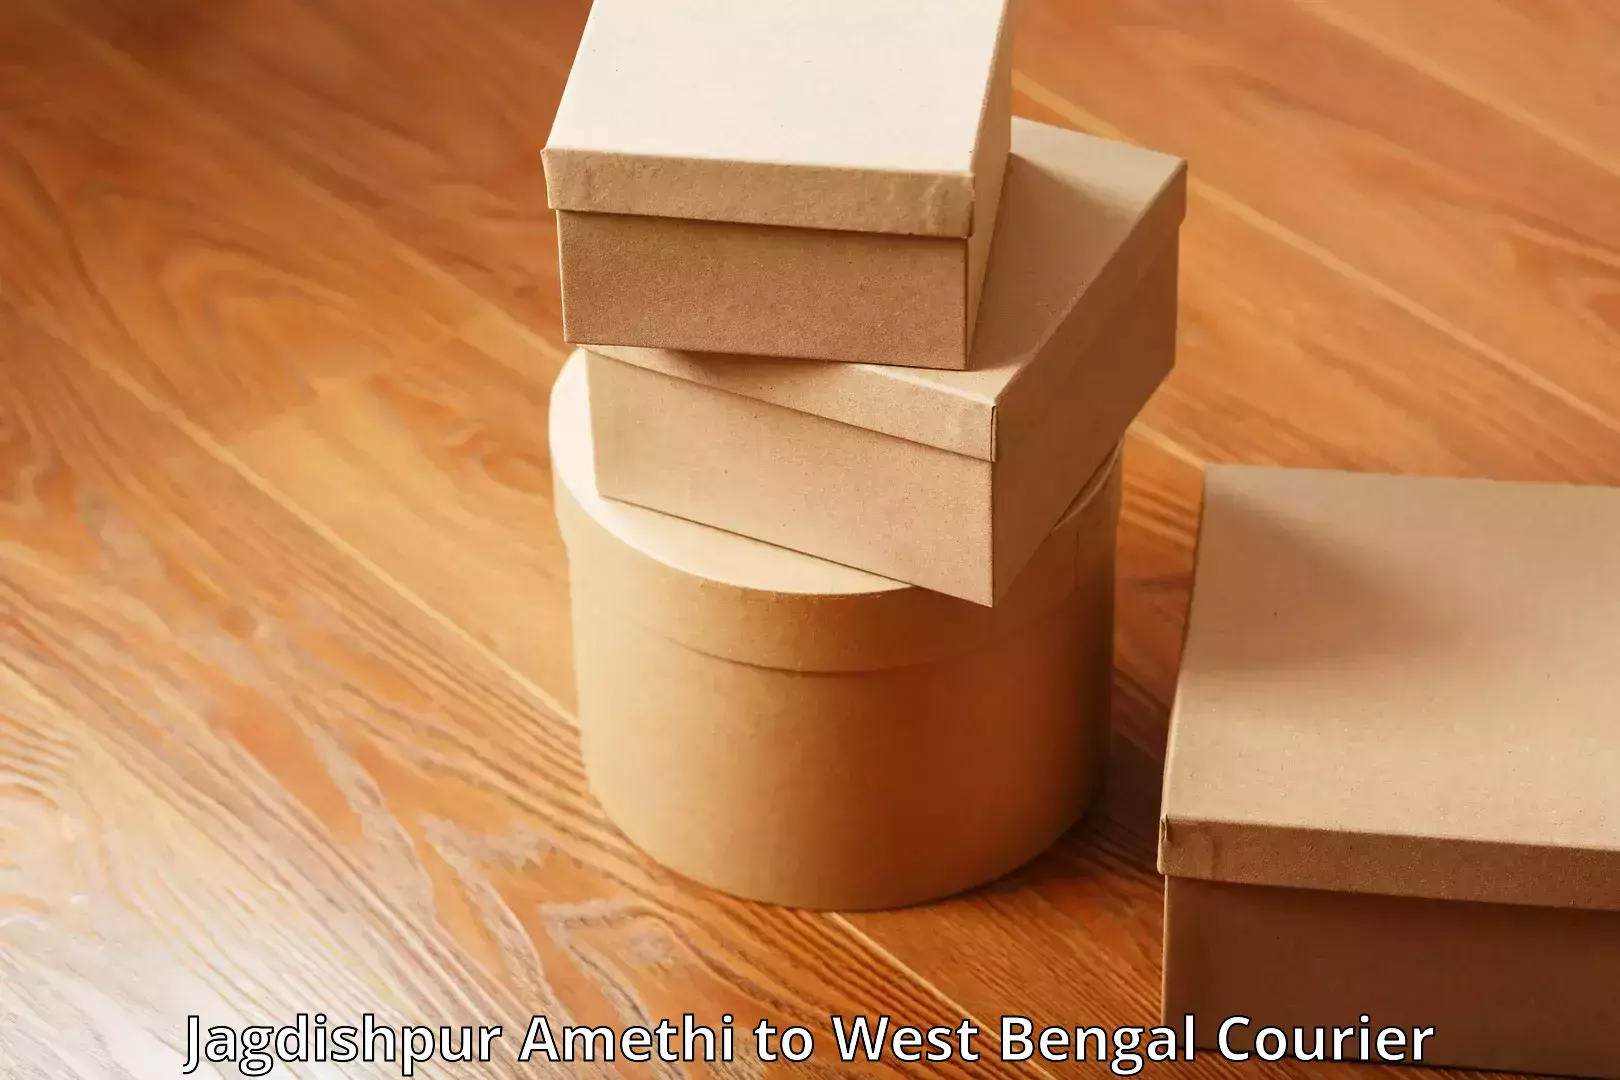 Luggage delivery network Jagdishpur Amethi to West Bengal